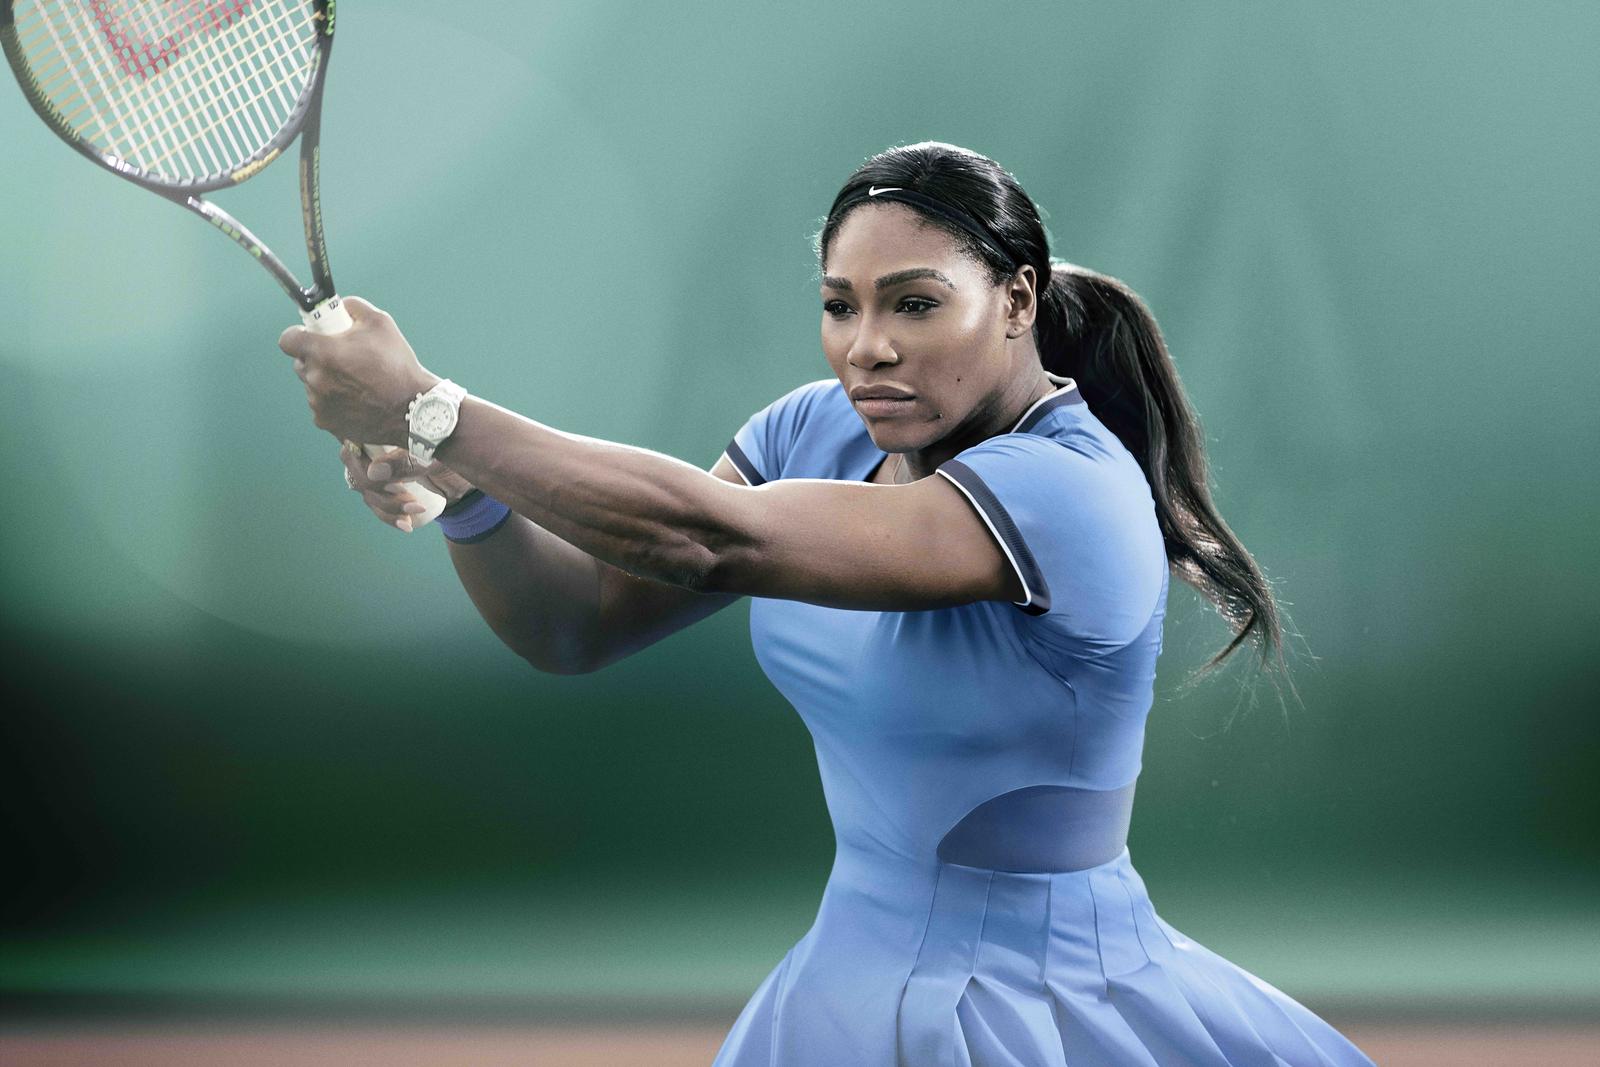 NikeCourt_Serena_Williams_2_native_1600.jpg